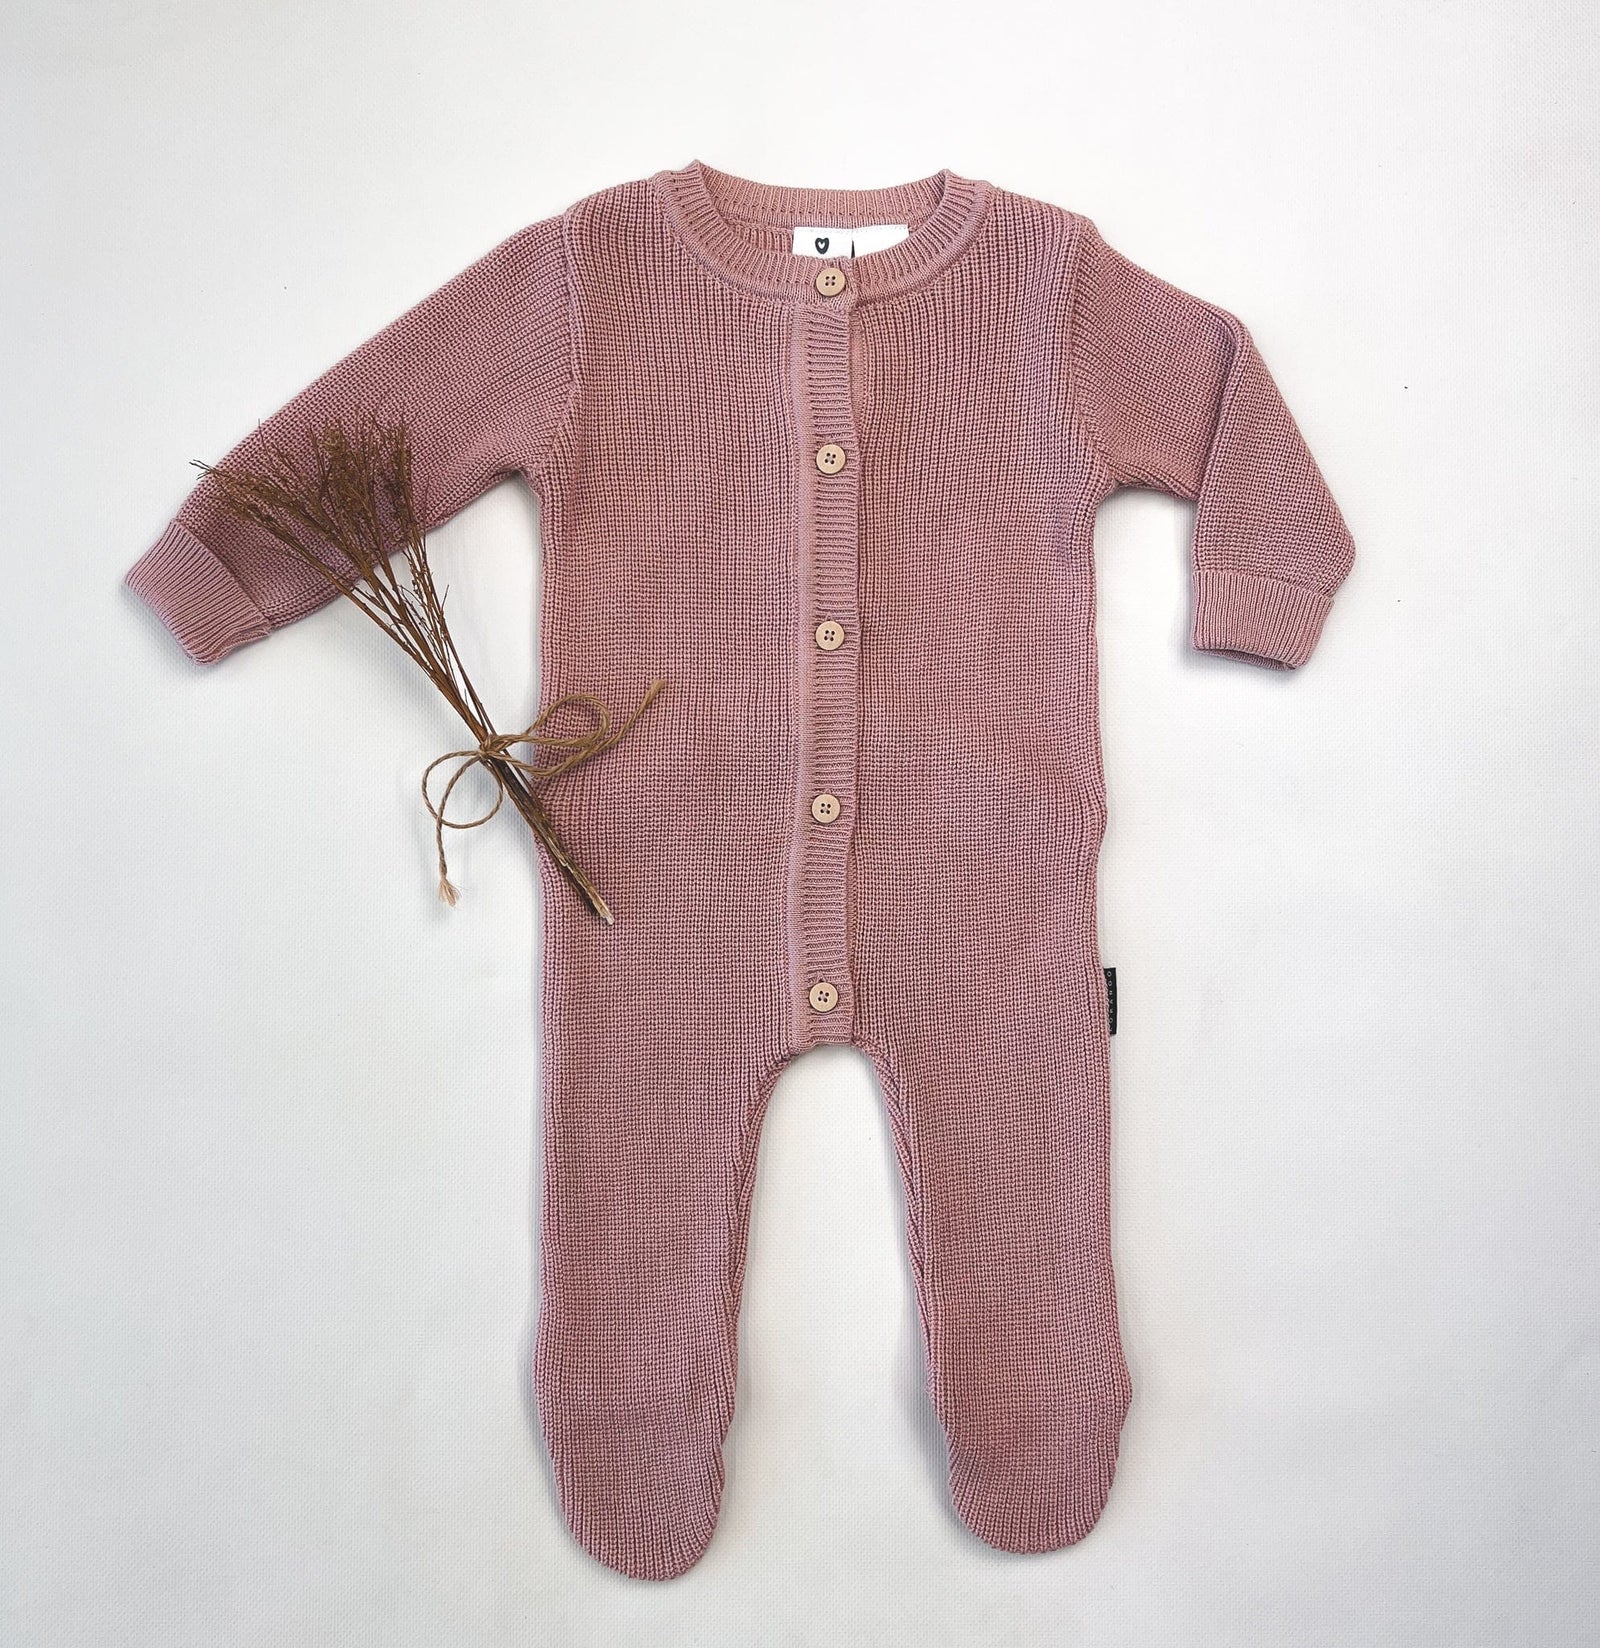 Korango Knit Onesie Baby Girls Plush Knit Romper - Dusty Pink